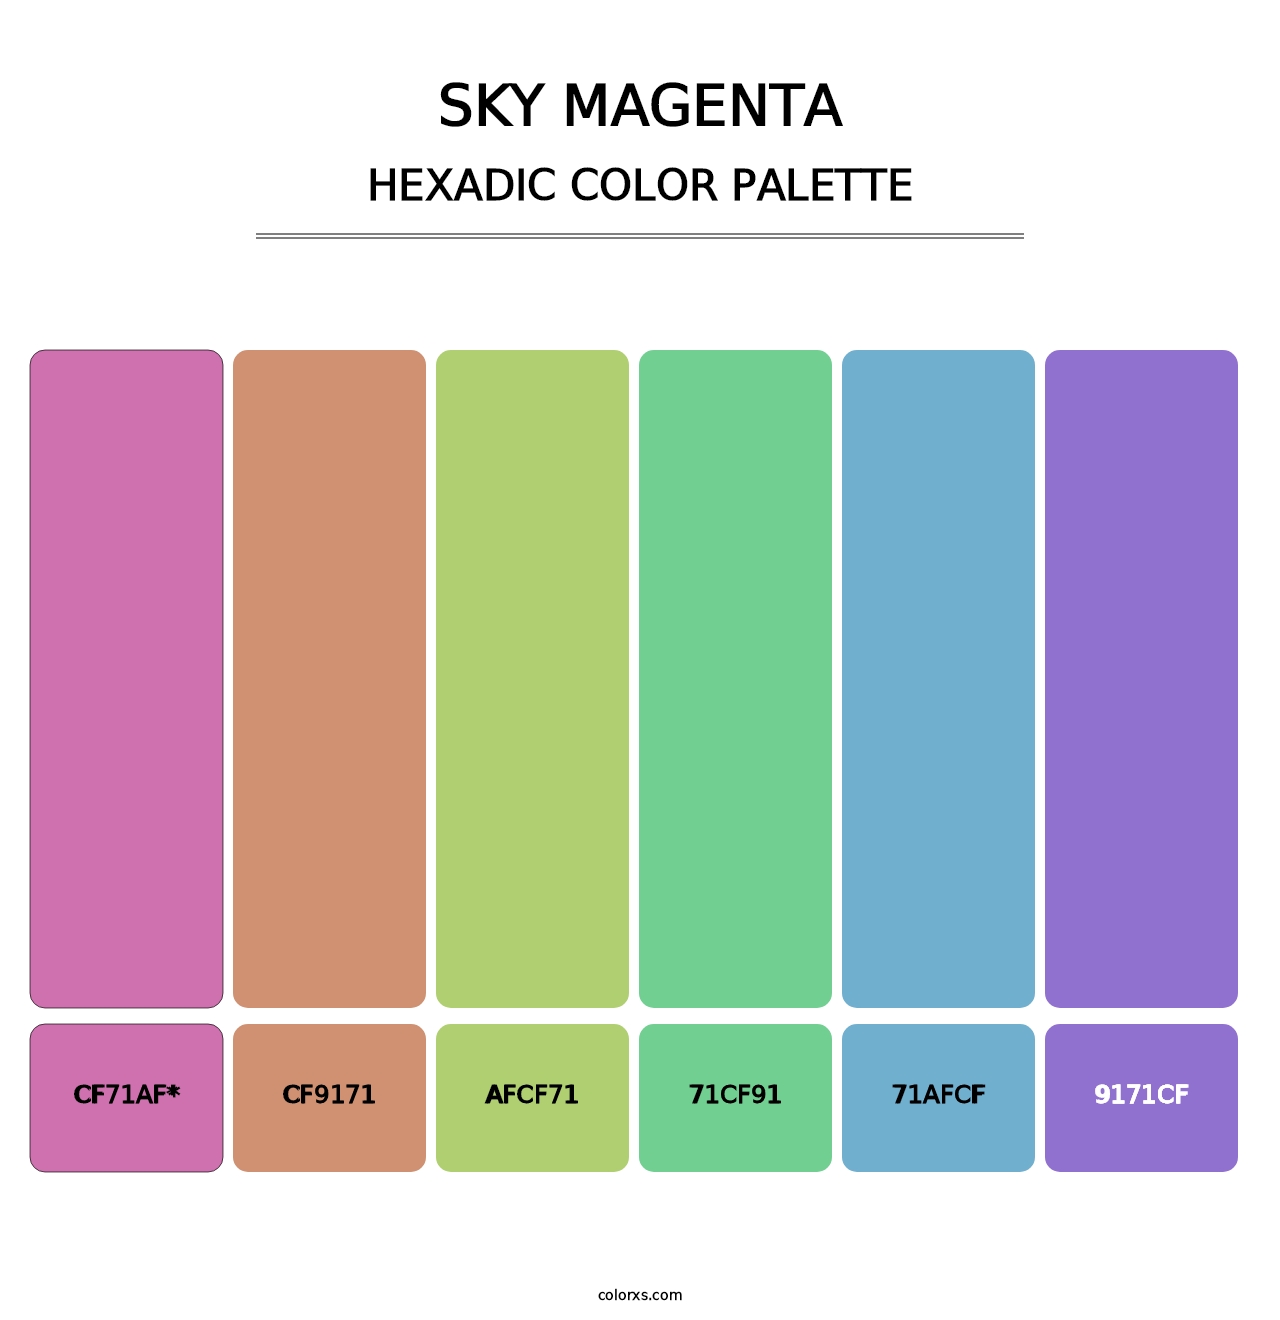 Sky Magenta - Hexadic Color Palette